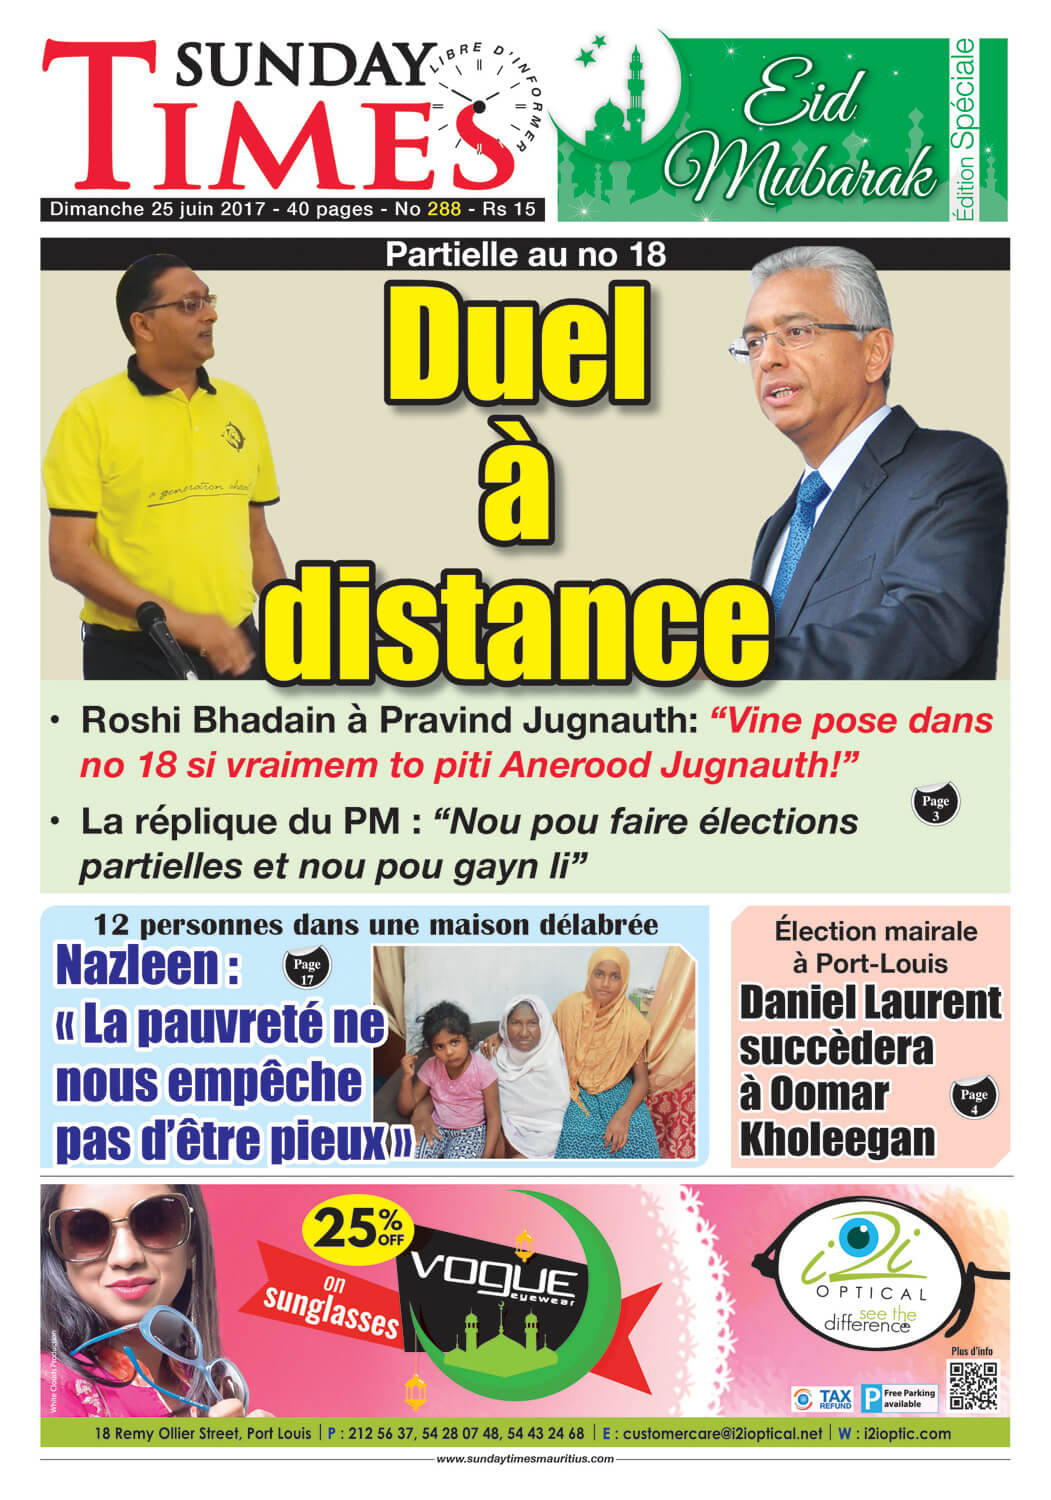 Mauritius Newspapers 11 sunday times